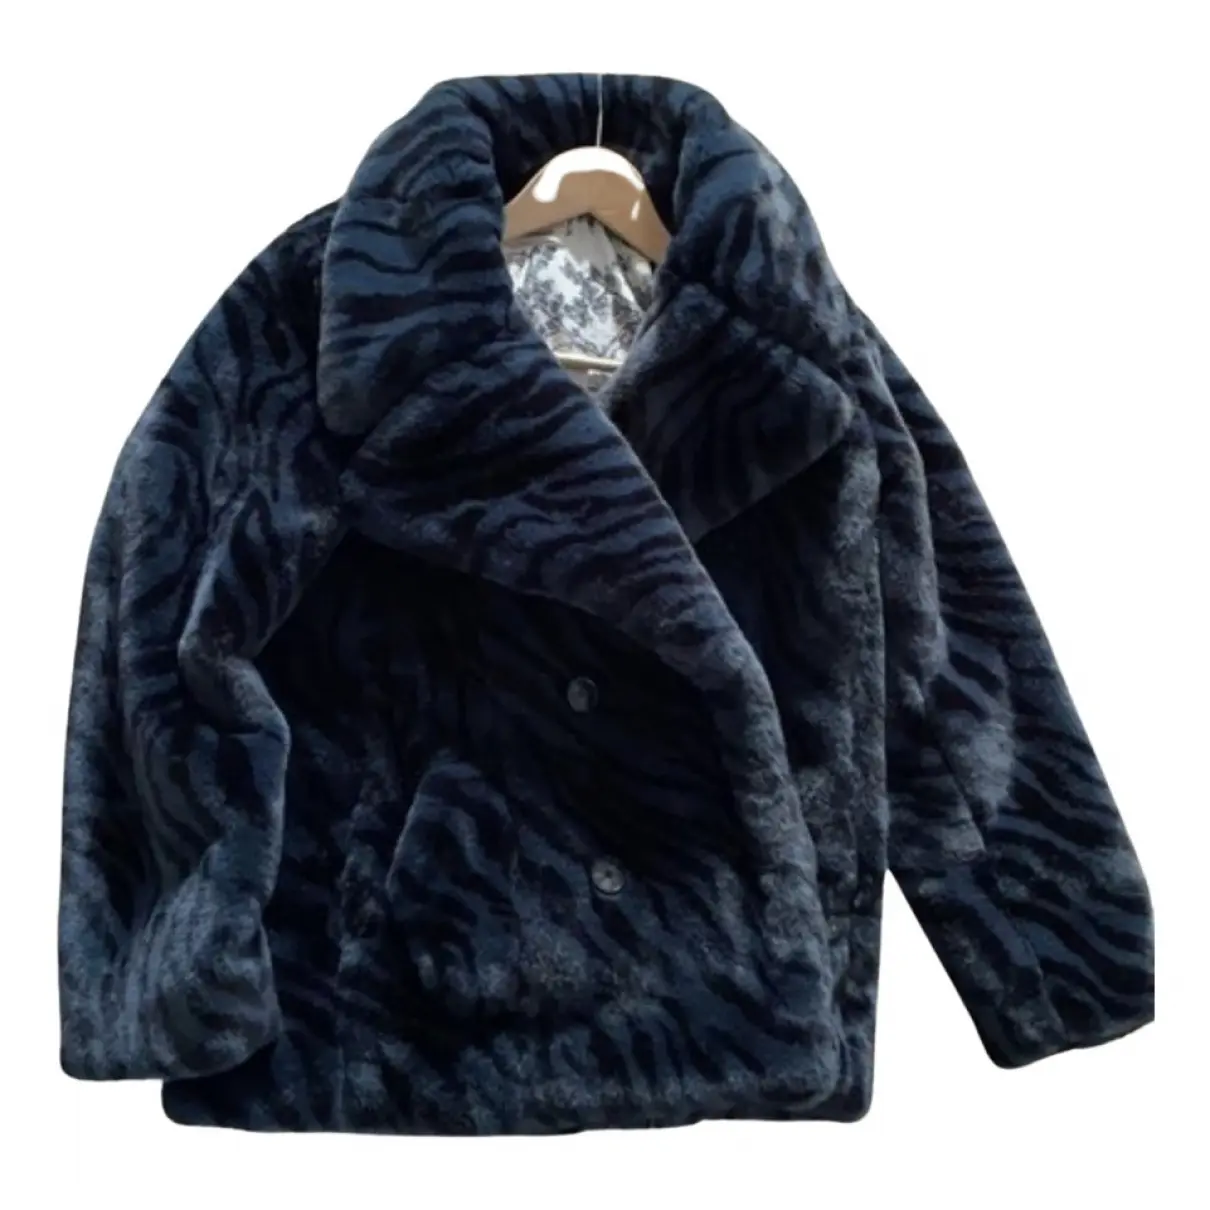 Fall Winter 2020 faux fur coat Zadig & Voltaire